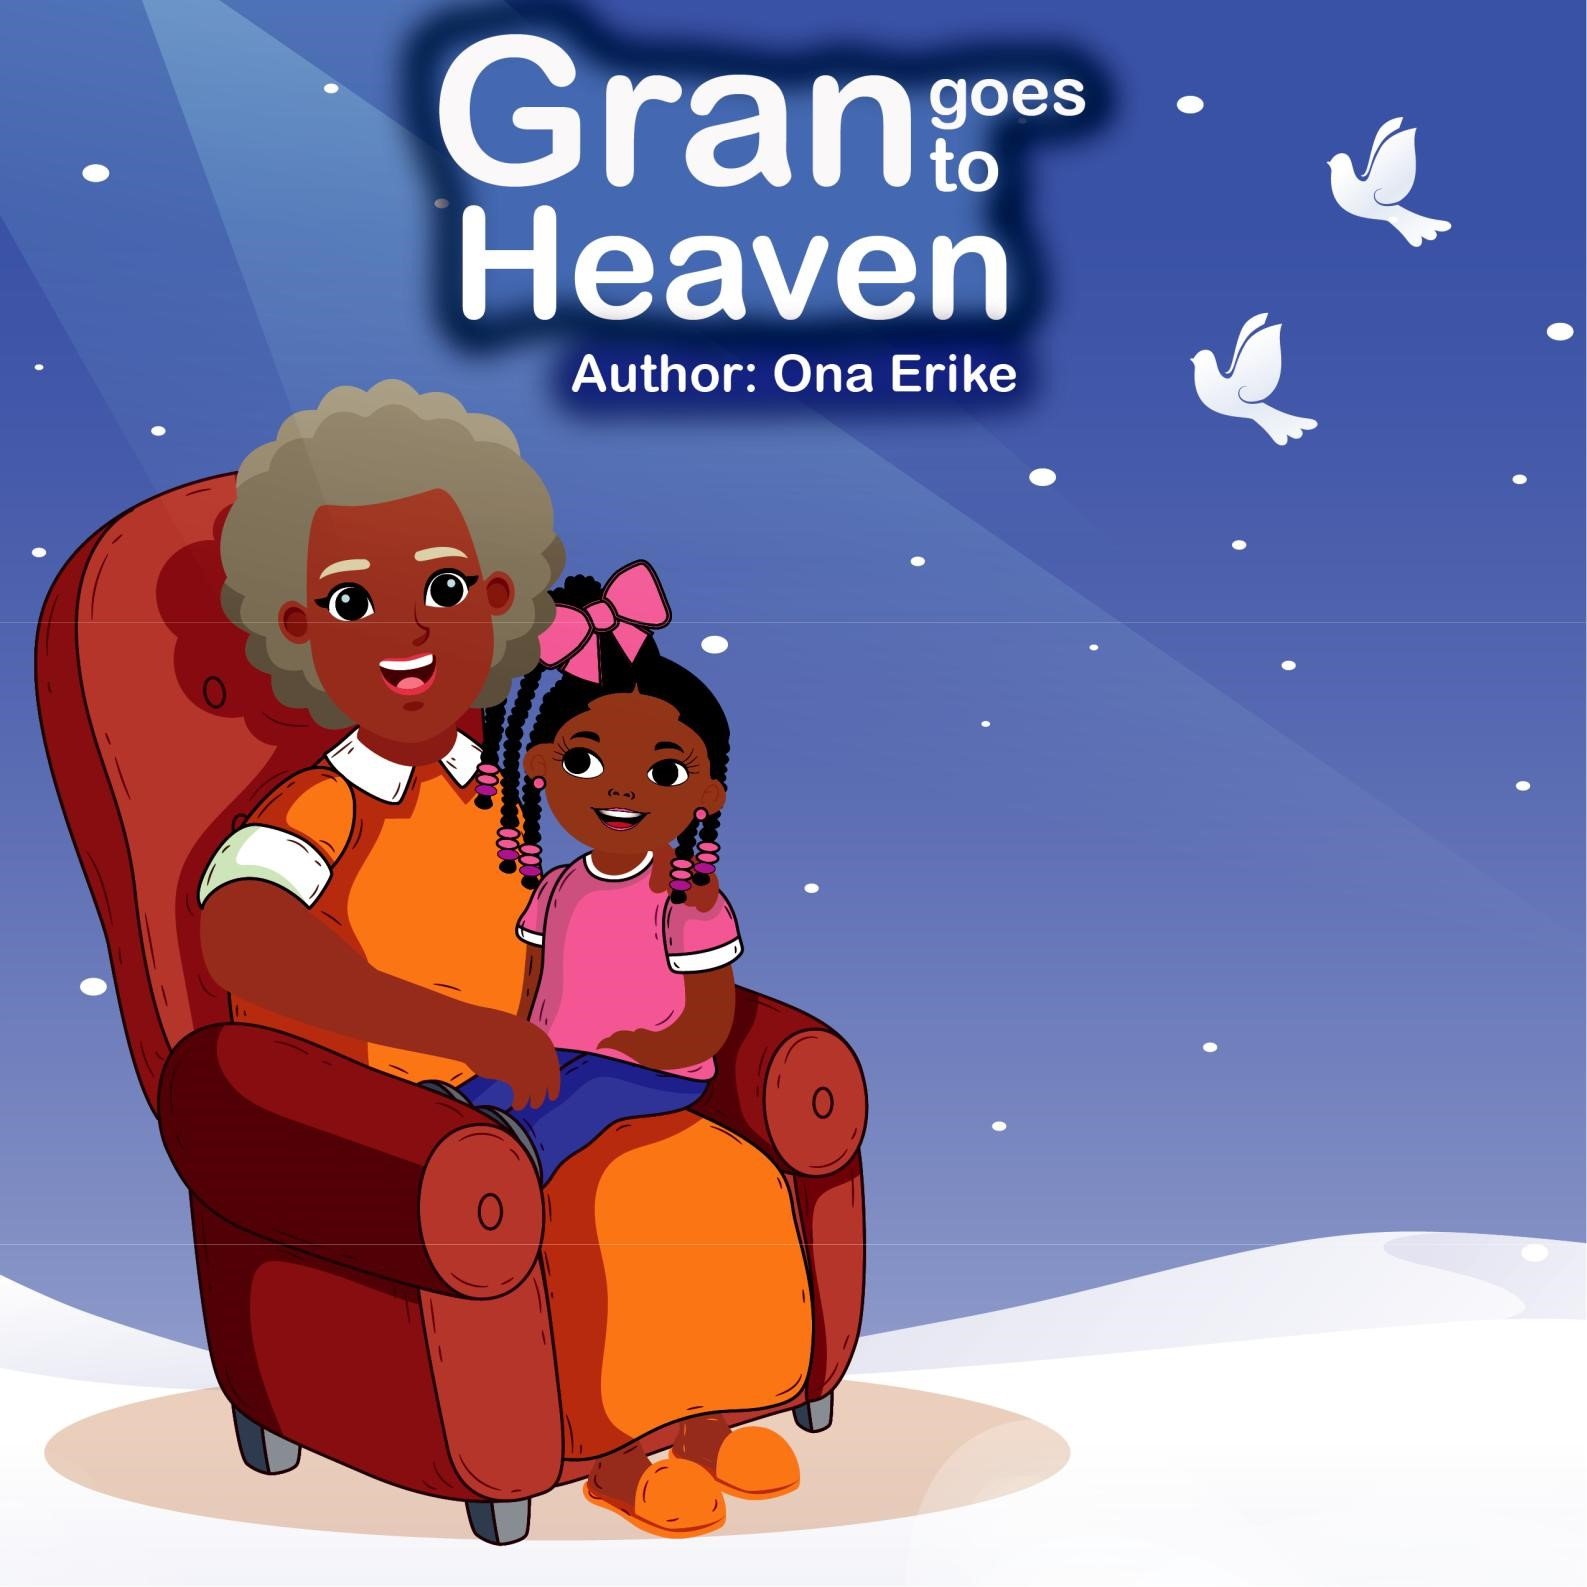 Gran goes to Heaven